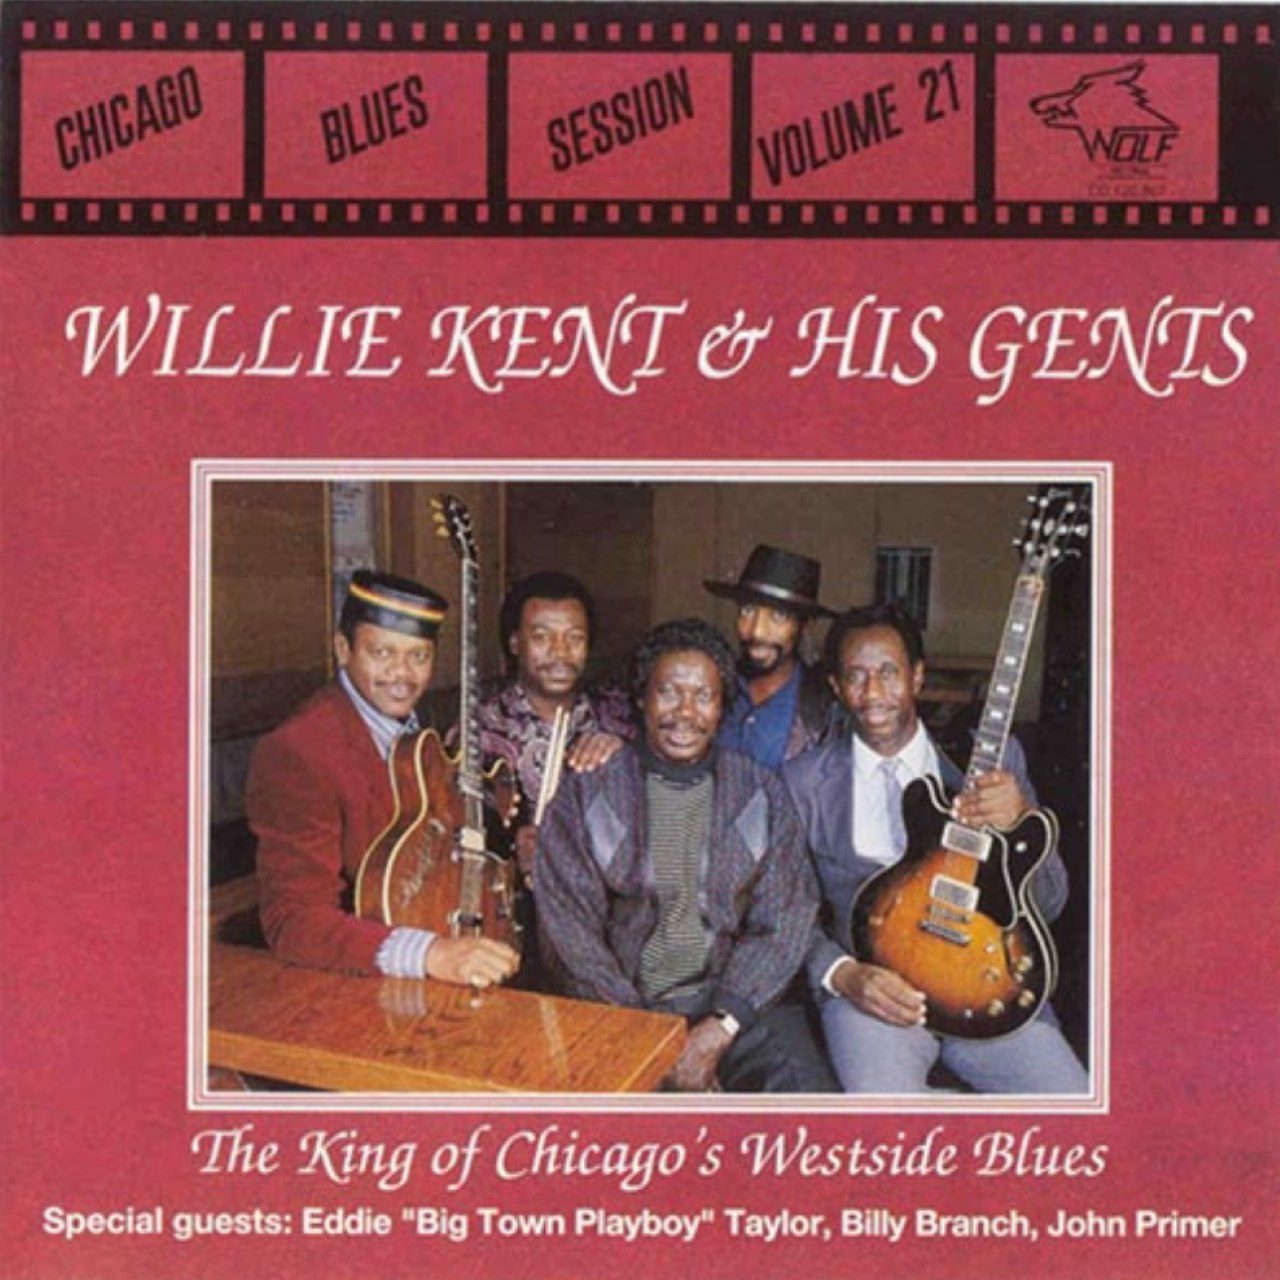 Willie Kent & His Gents – Chicago Blues Session Vol. 21 cover album